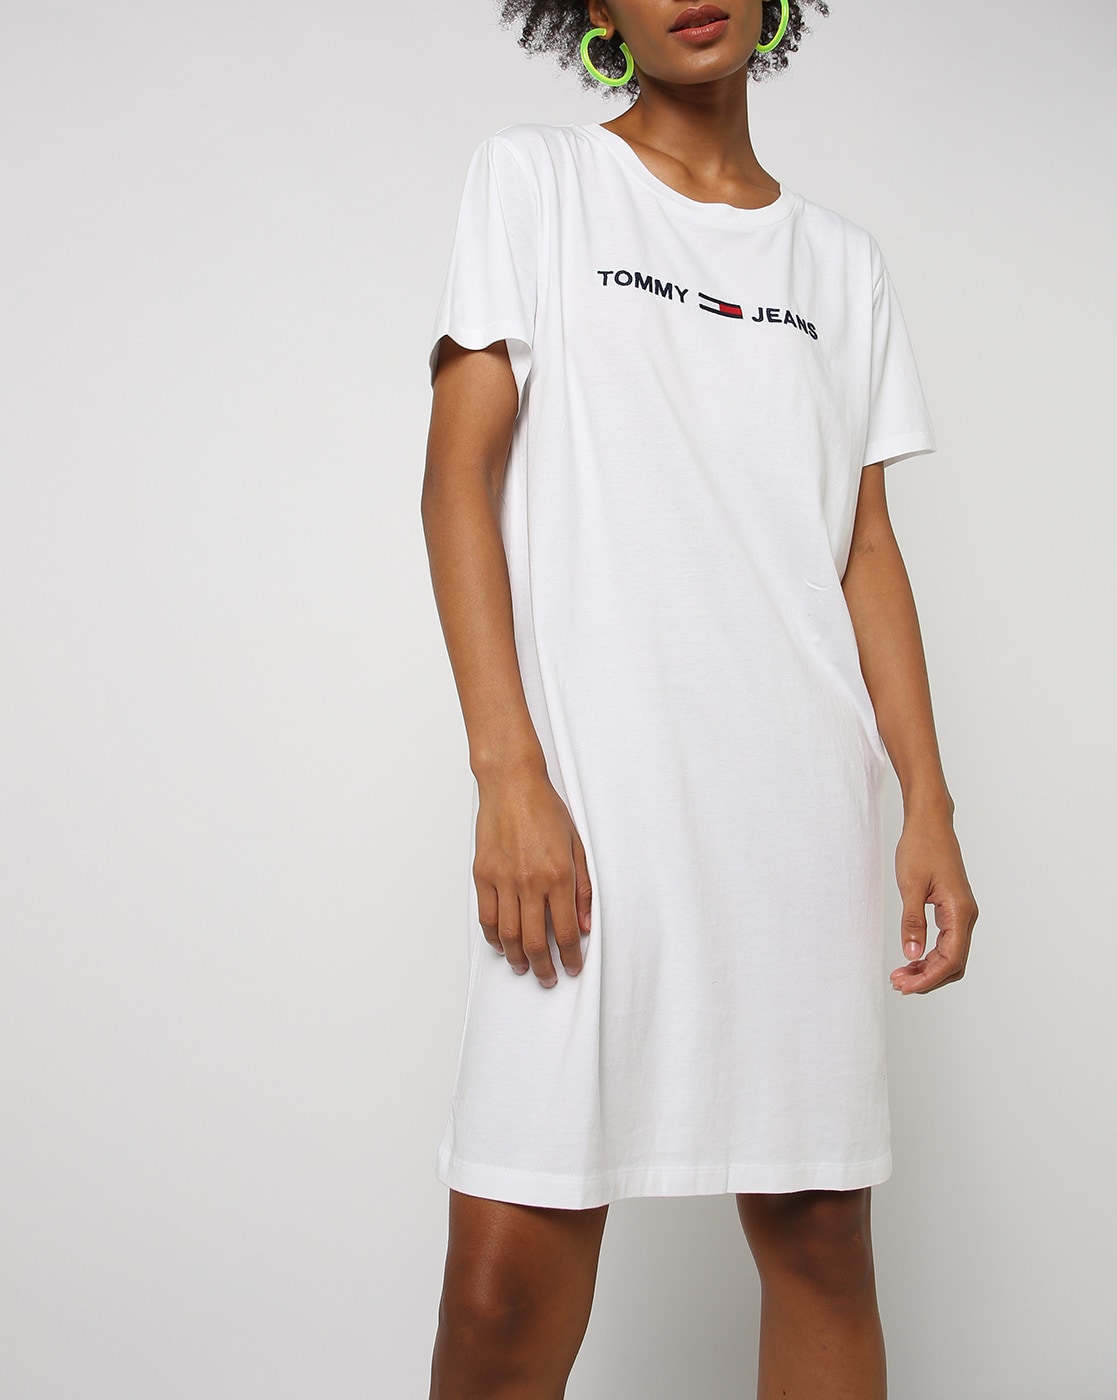 vermoeidheid Vertolking Minnaar Buy White Dresses for Women by TOMMY HILFIGER Online | Ajio.com